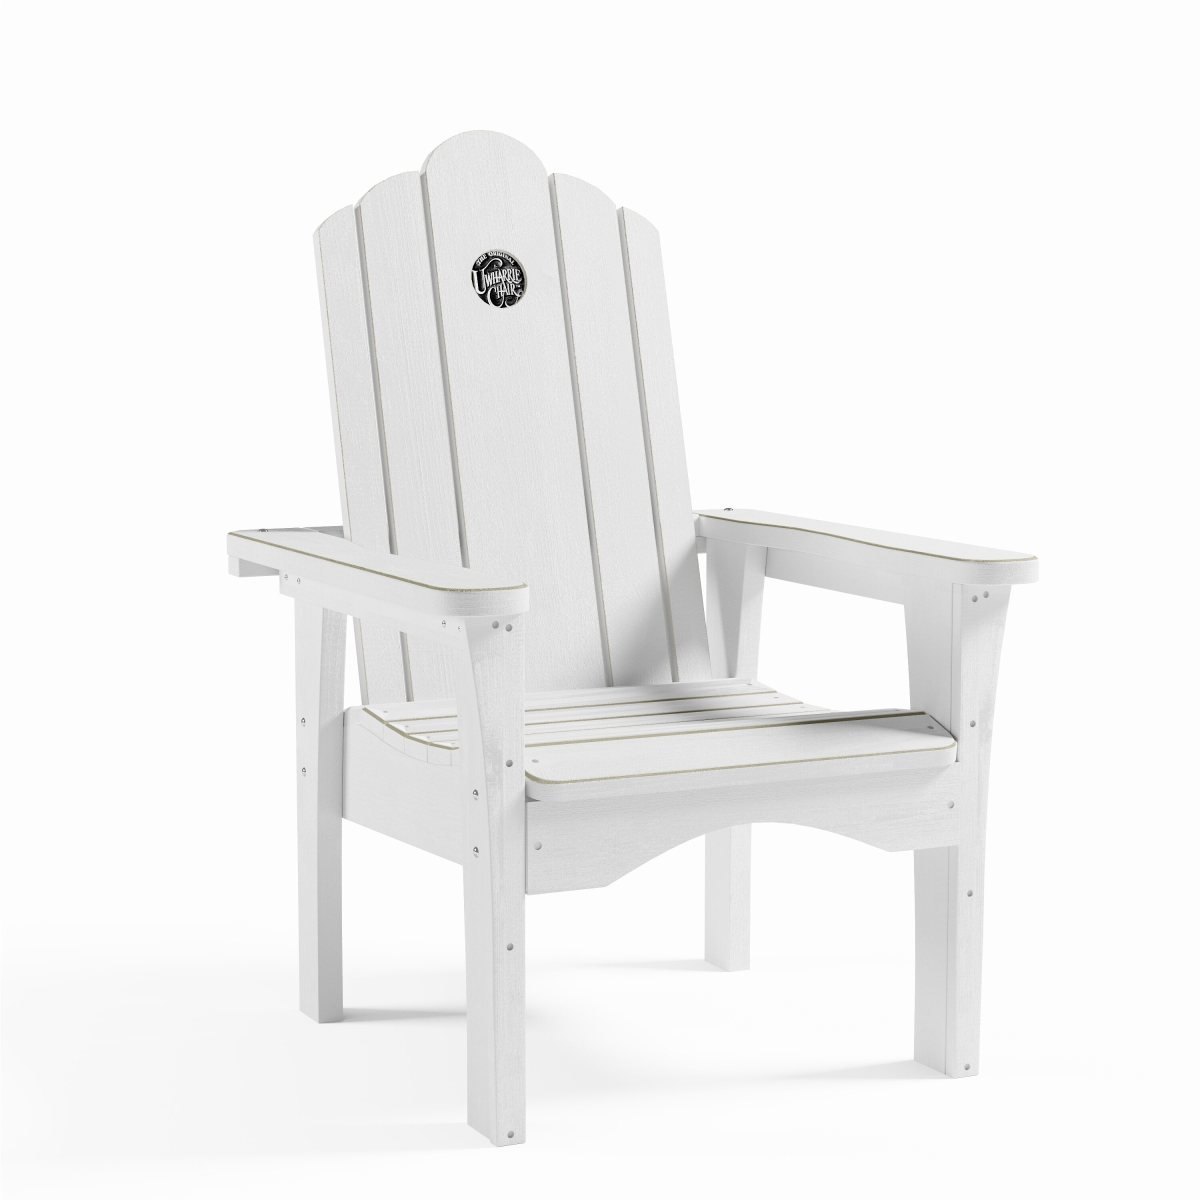 S114-091 Original Wood Lounge Chair, True Black Pine - 30.5 X 33.5 X 43.5 In.